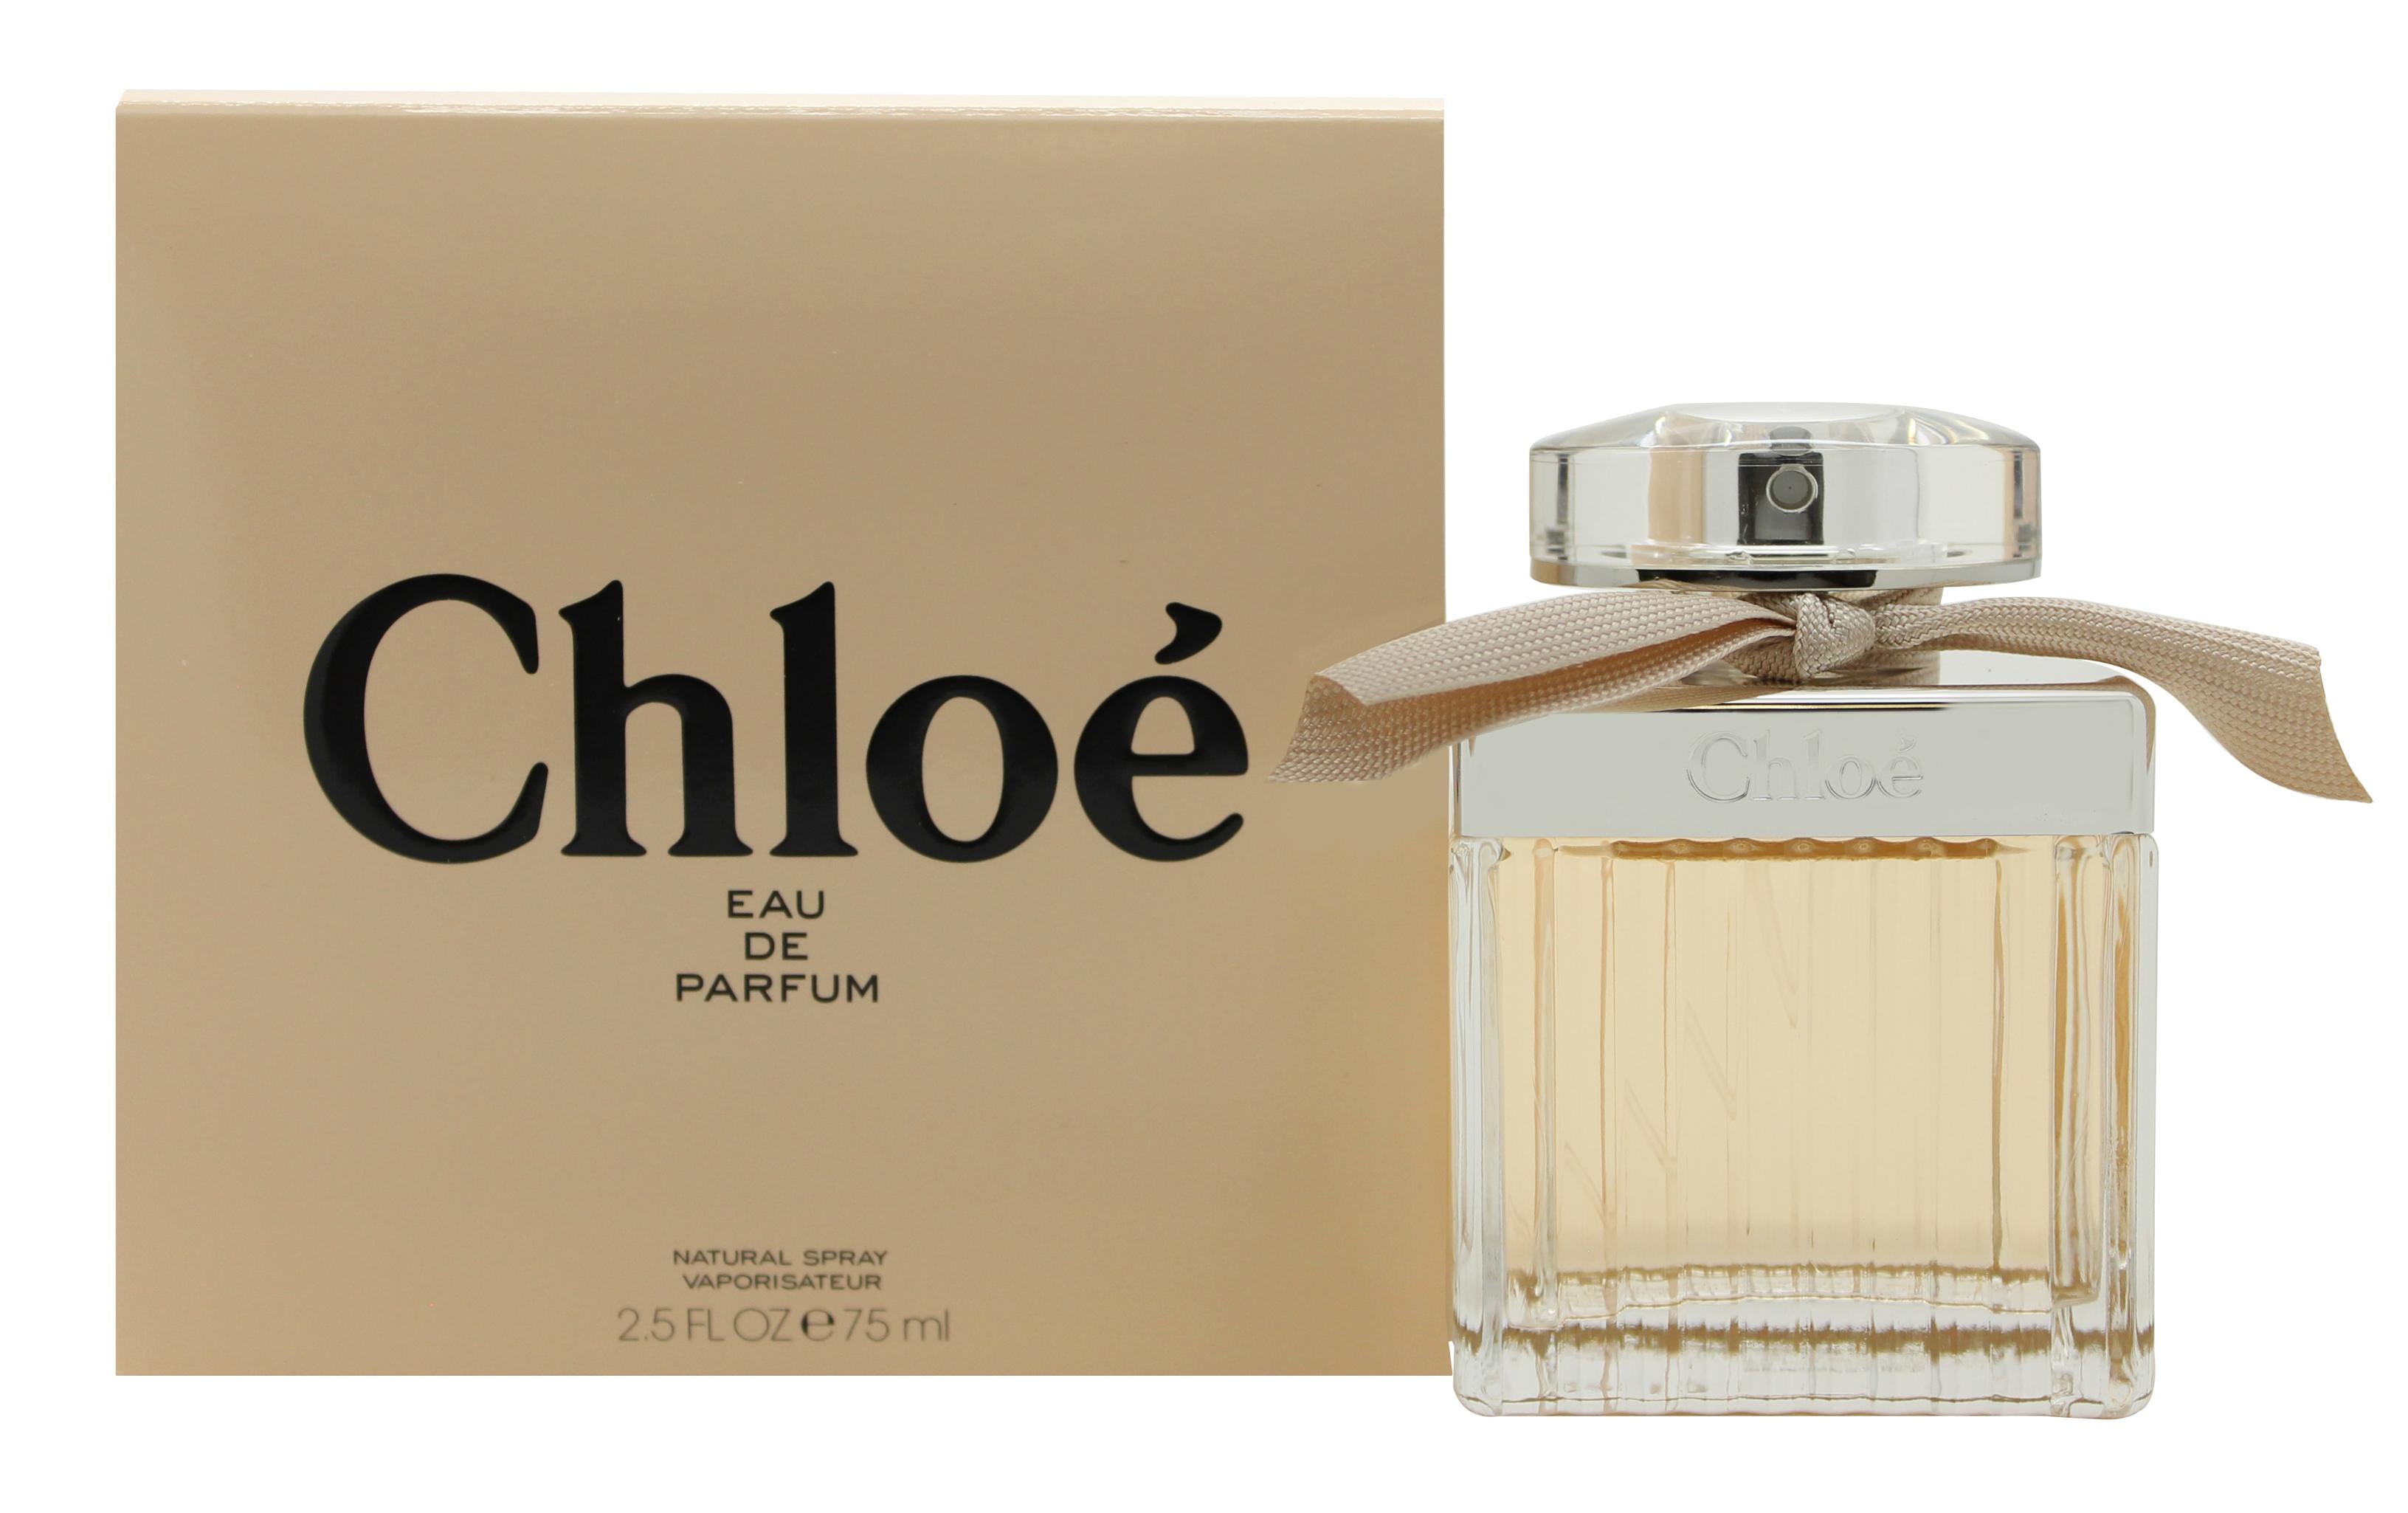 View Chloé Signature Eau de Parfum 75ml Spray information